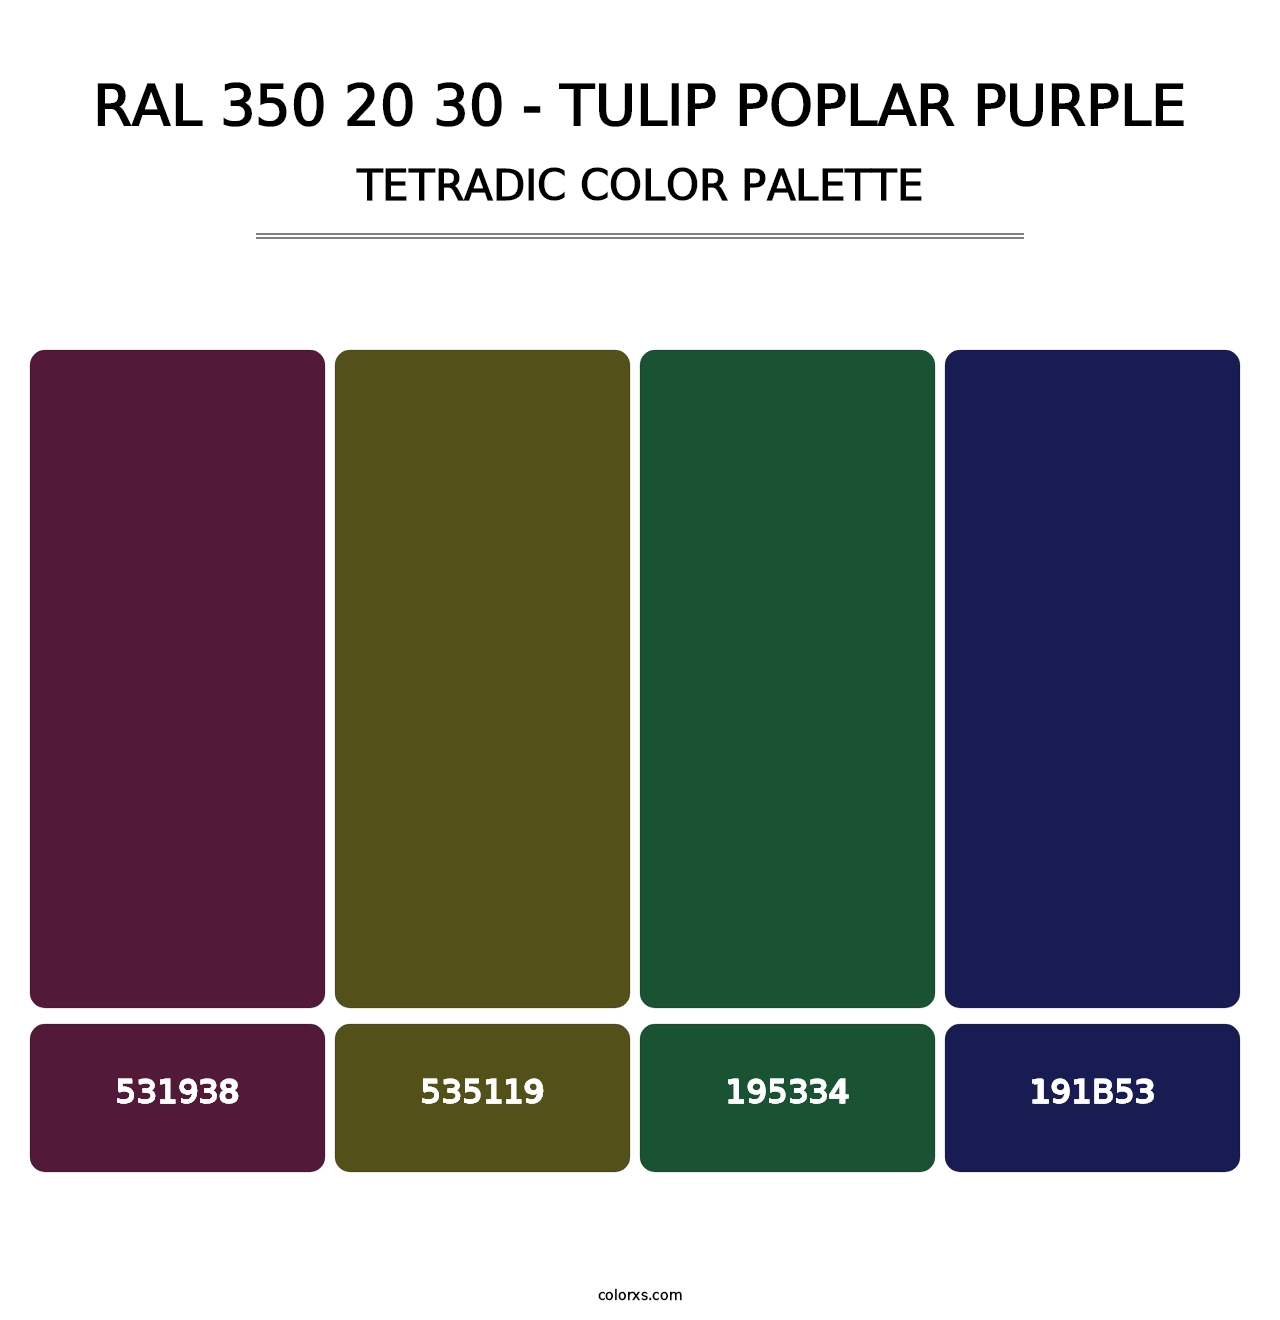 RAL 350 20 30 - Tulip Poplar Purple - Tetradic Color Palette